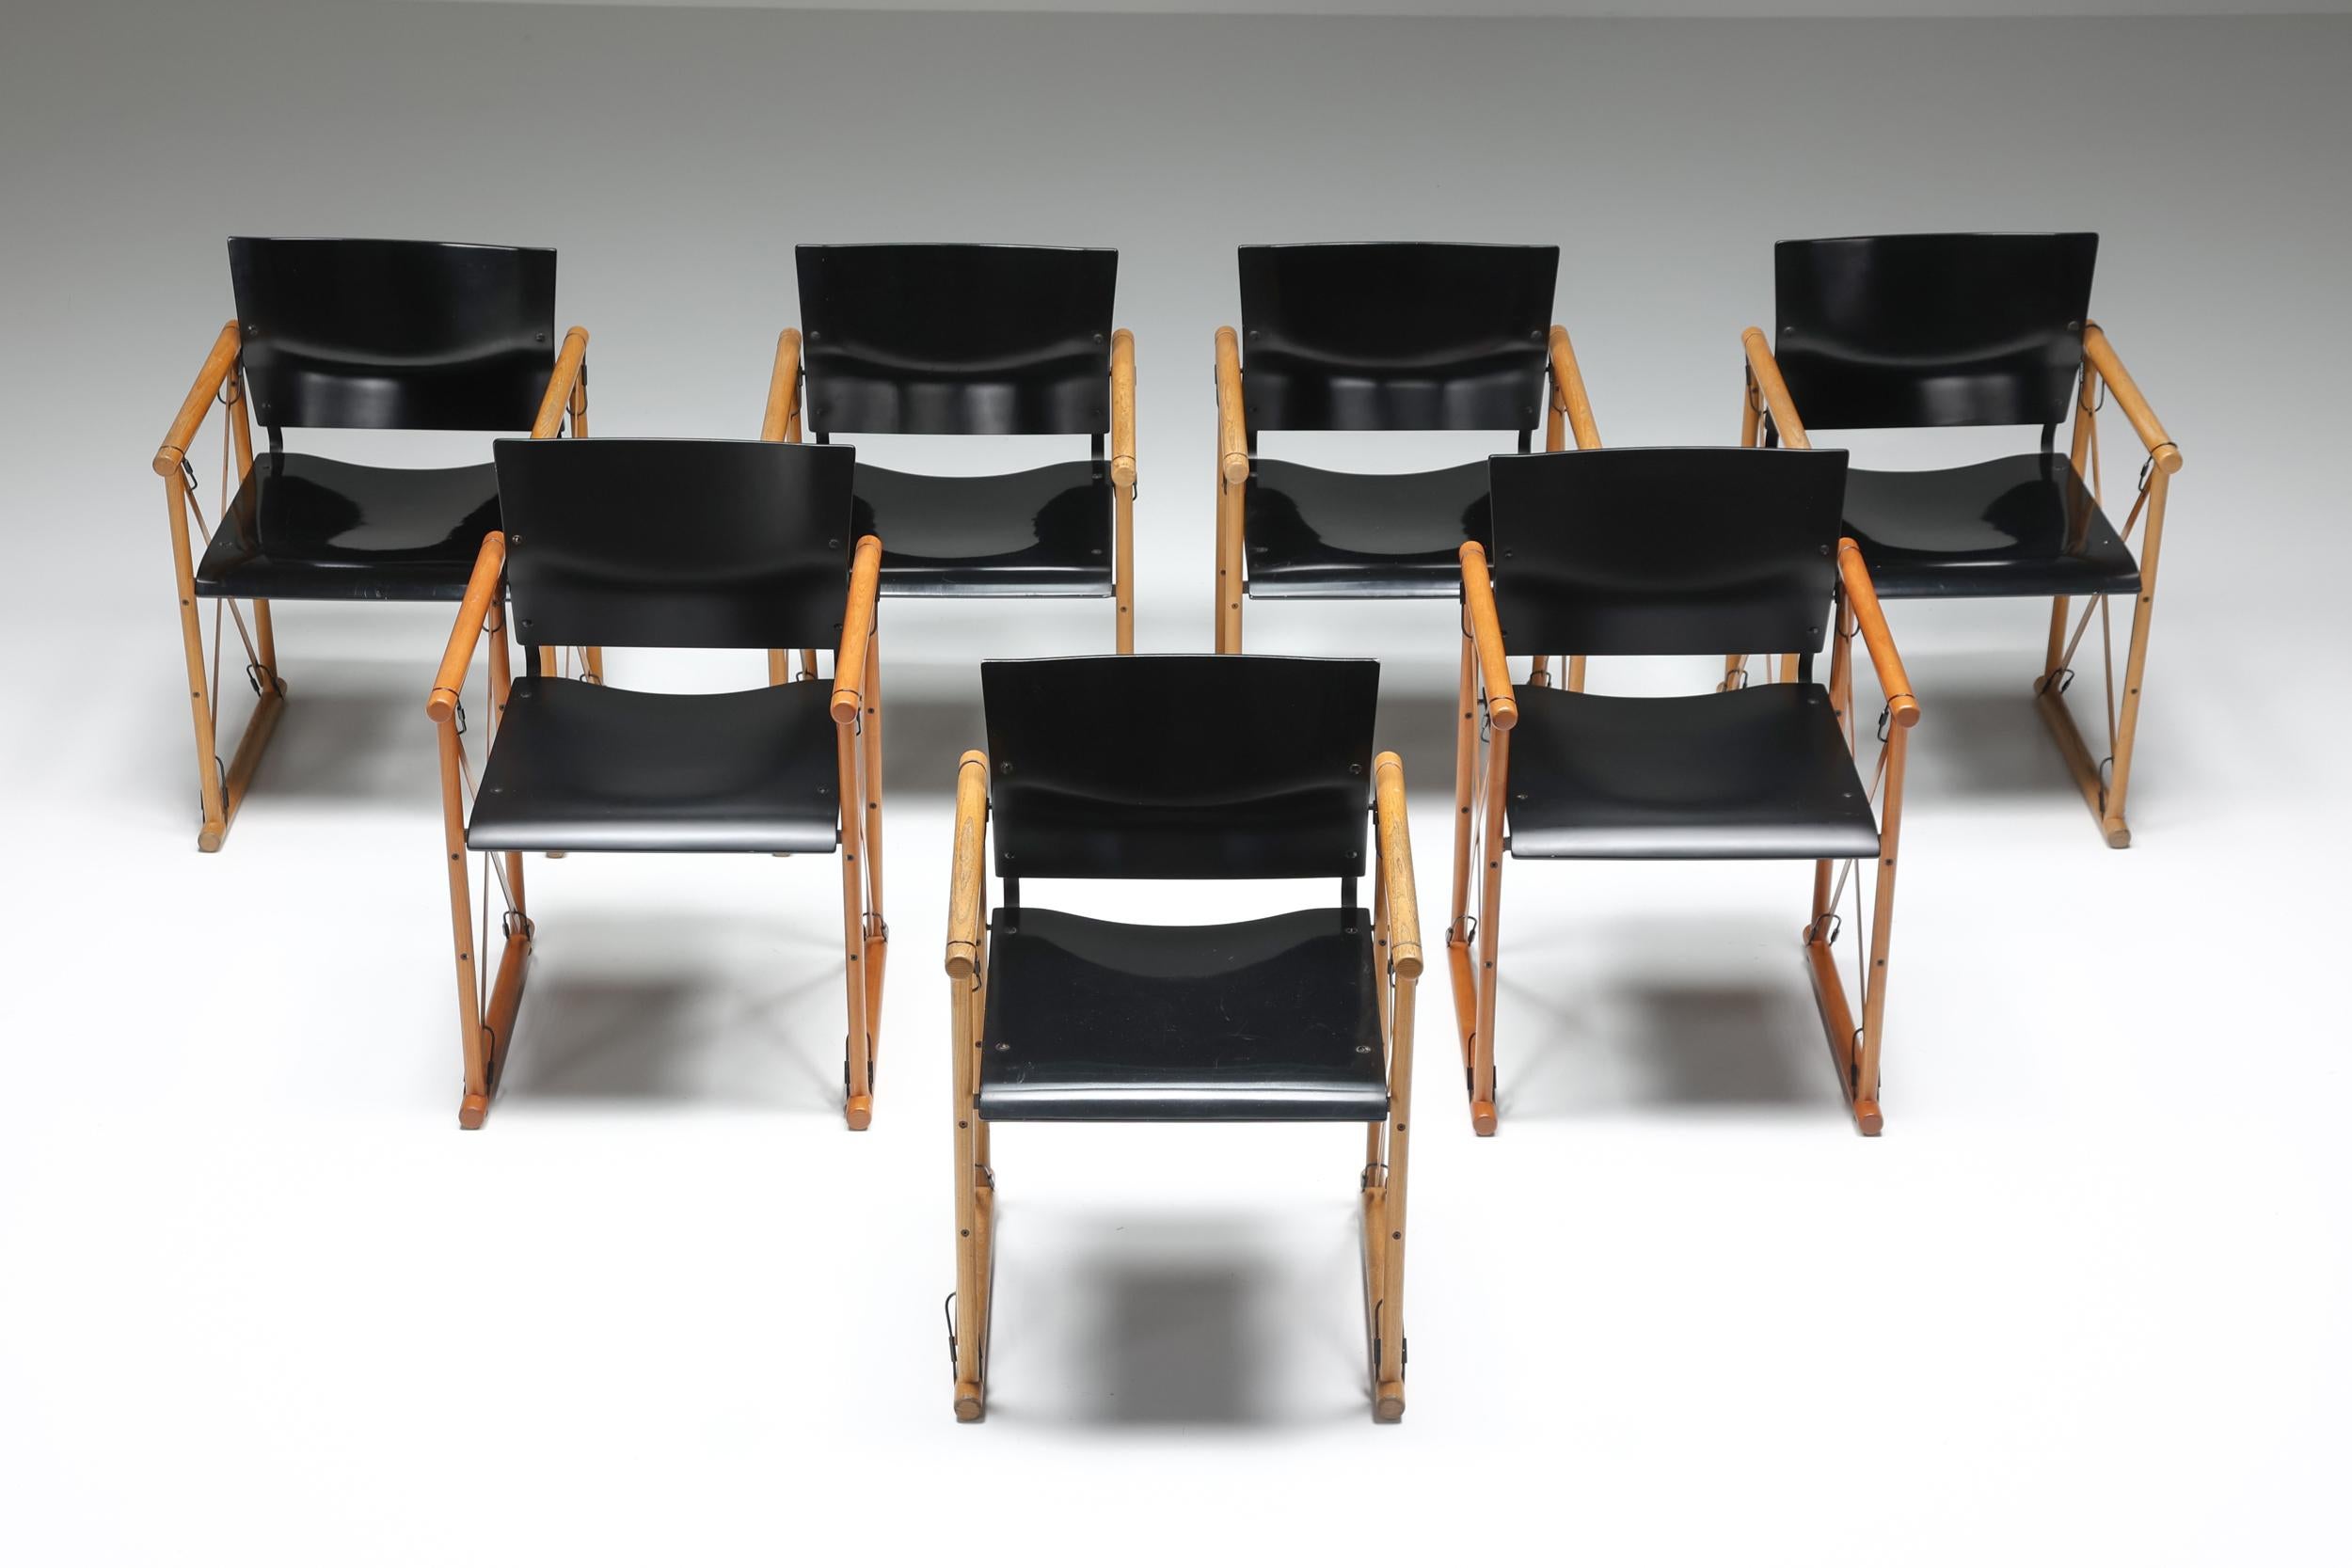 Mogens Koch; Danish architect; Frans Van Praet; 1950's, Mid-century modern; Rud. Rasmussen;

Mid-century folding safari chairs were designed by Frans Van Praet in the 1950s. These chairs remind us of the style of Danish architect Mogens Koch. This